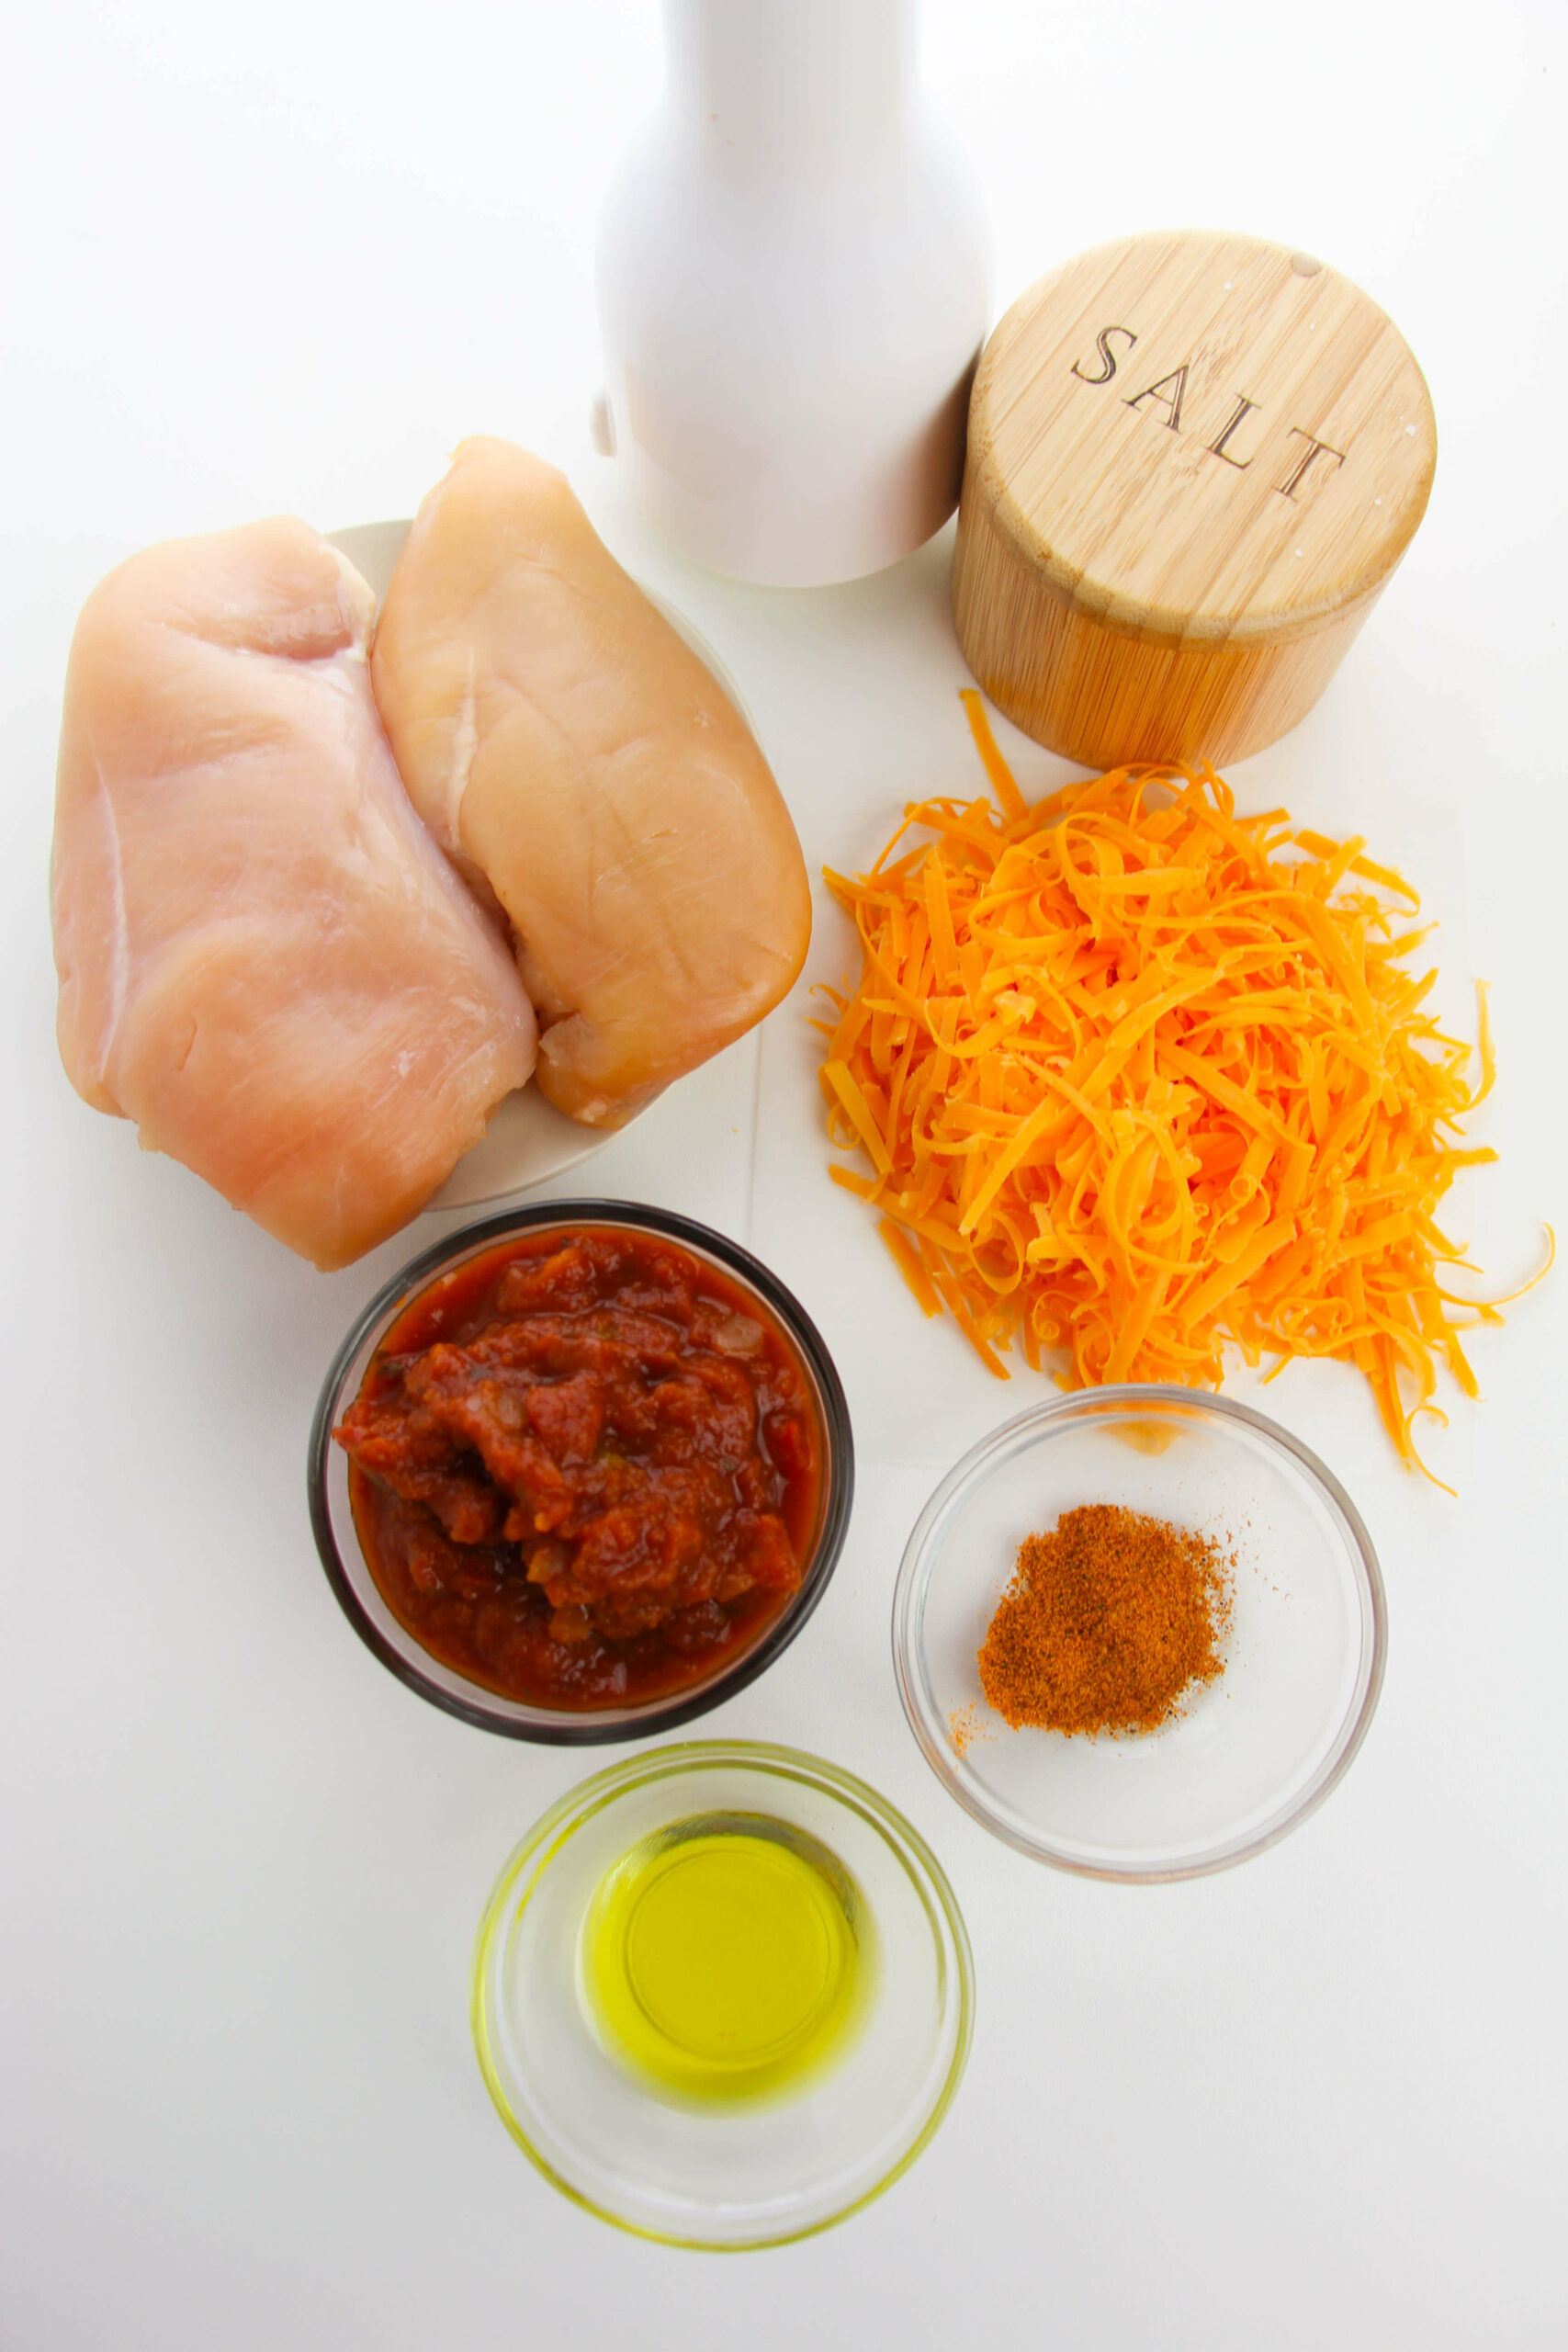 Ingredients to make salsa chicken, including chicken, salsa, cheese and seasoning.